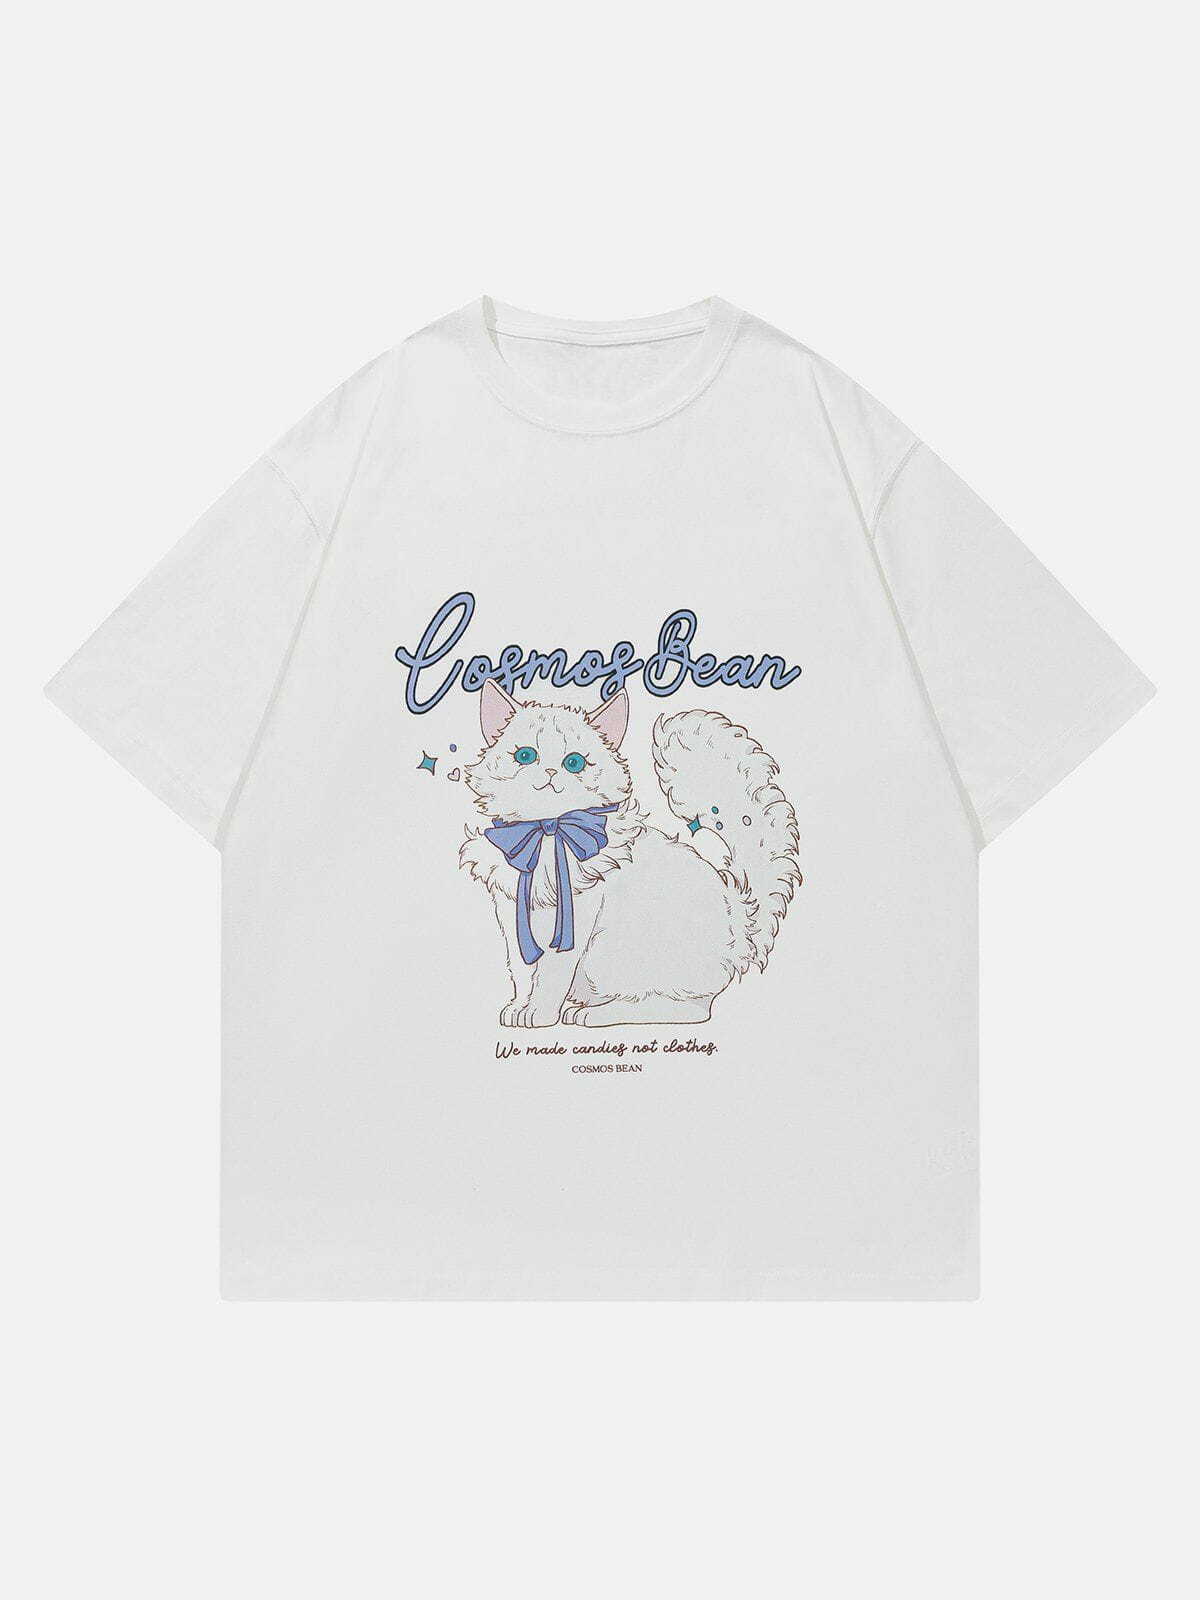 dynamic cartoon cat print tshirt edgy  retro streetwear top 7025